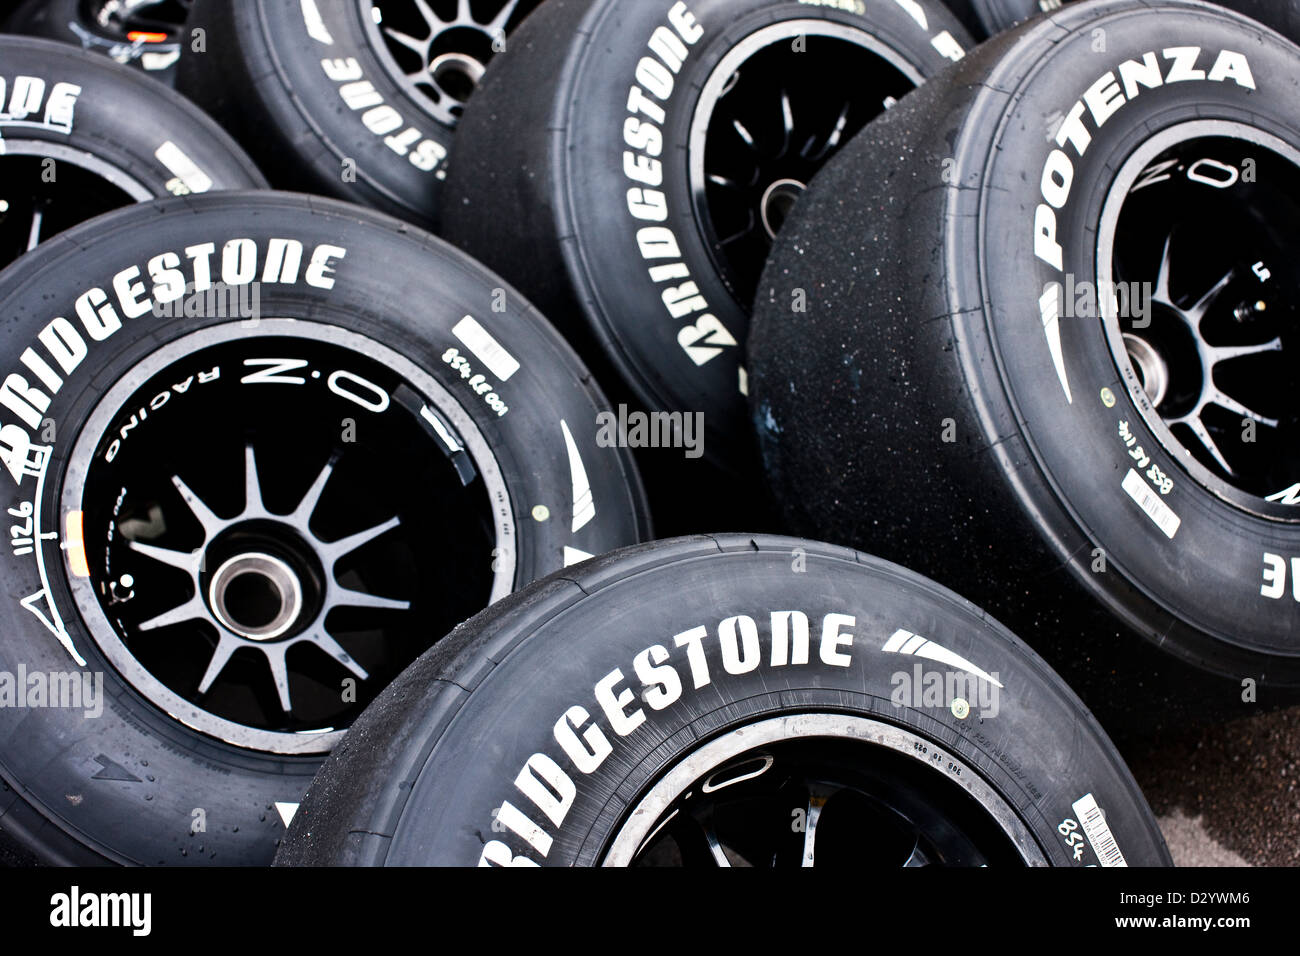 Formula one car wheels, Barcelona, 27 02 10 Stock Photo